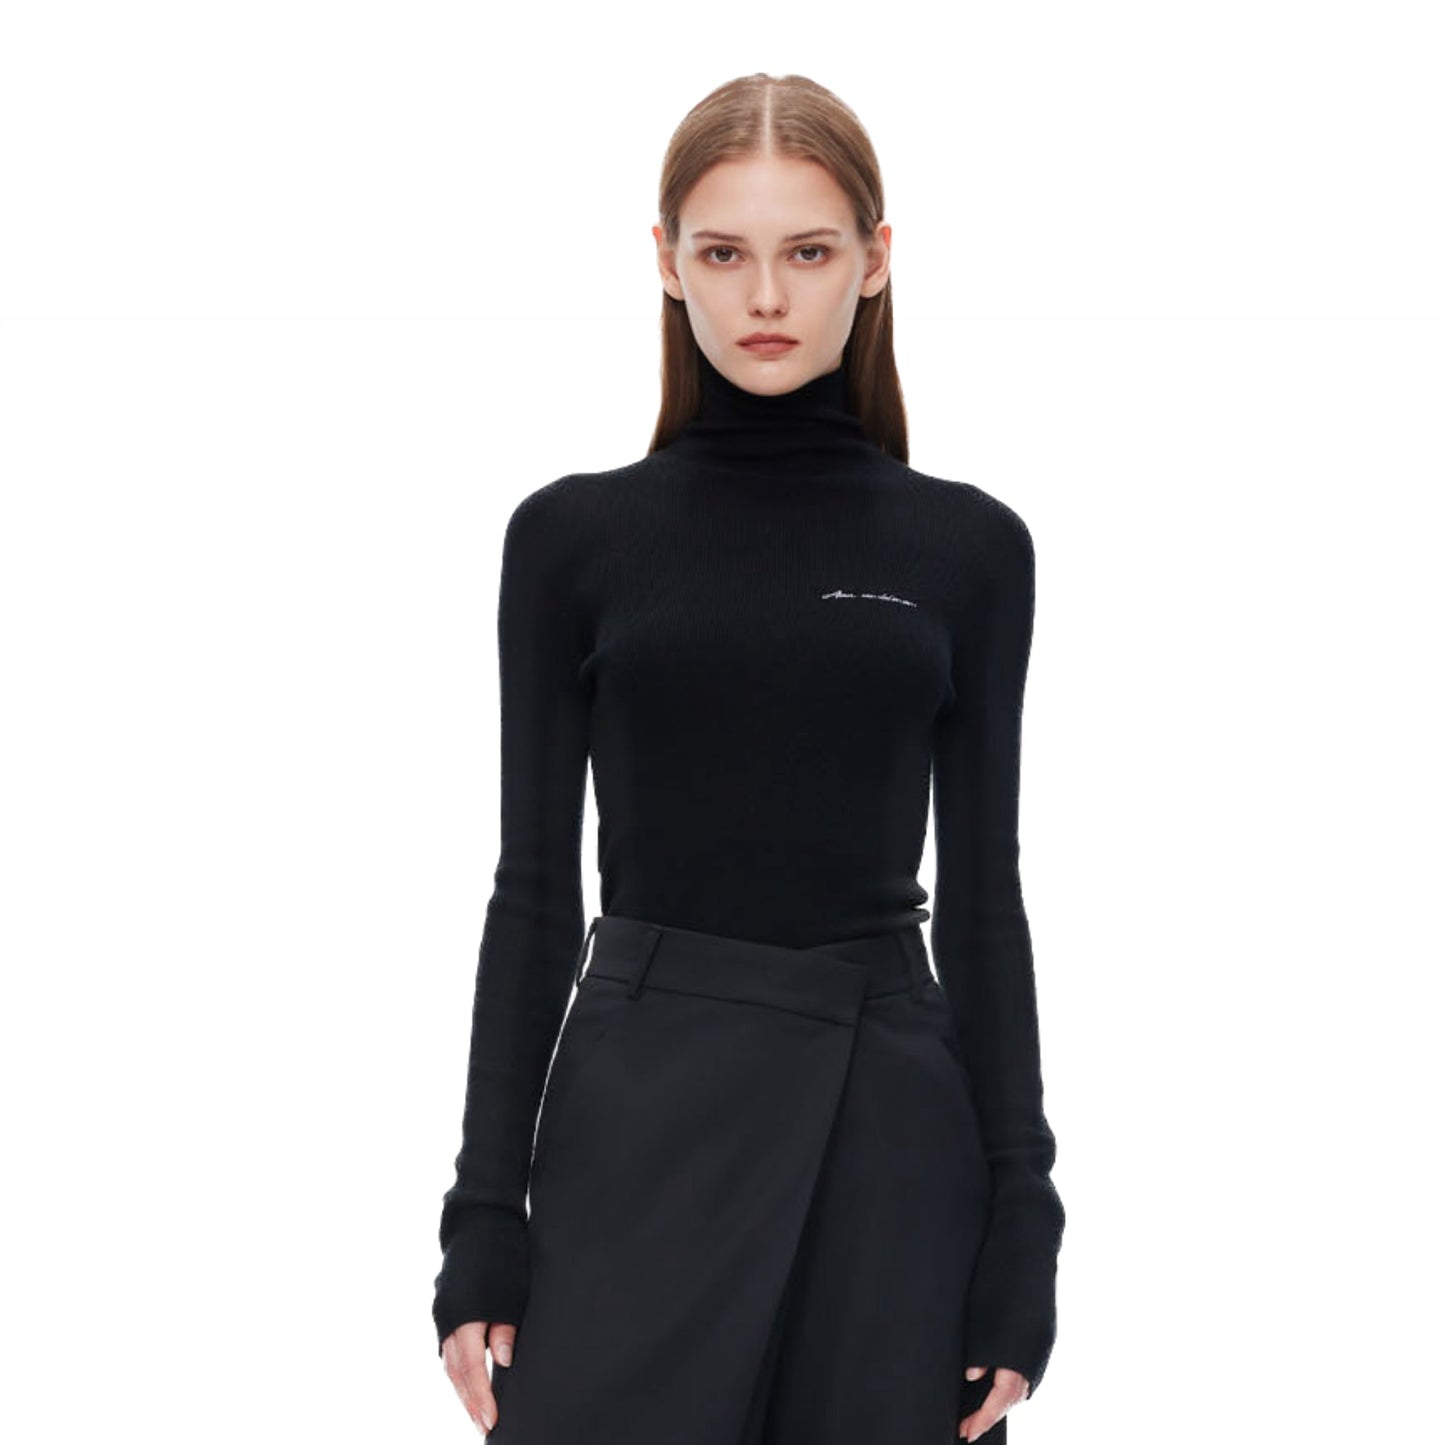 Ann Andelman Black Pullover Half-turtleneck Knit Shirt